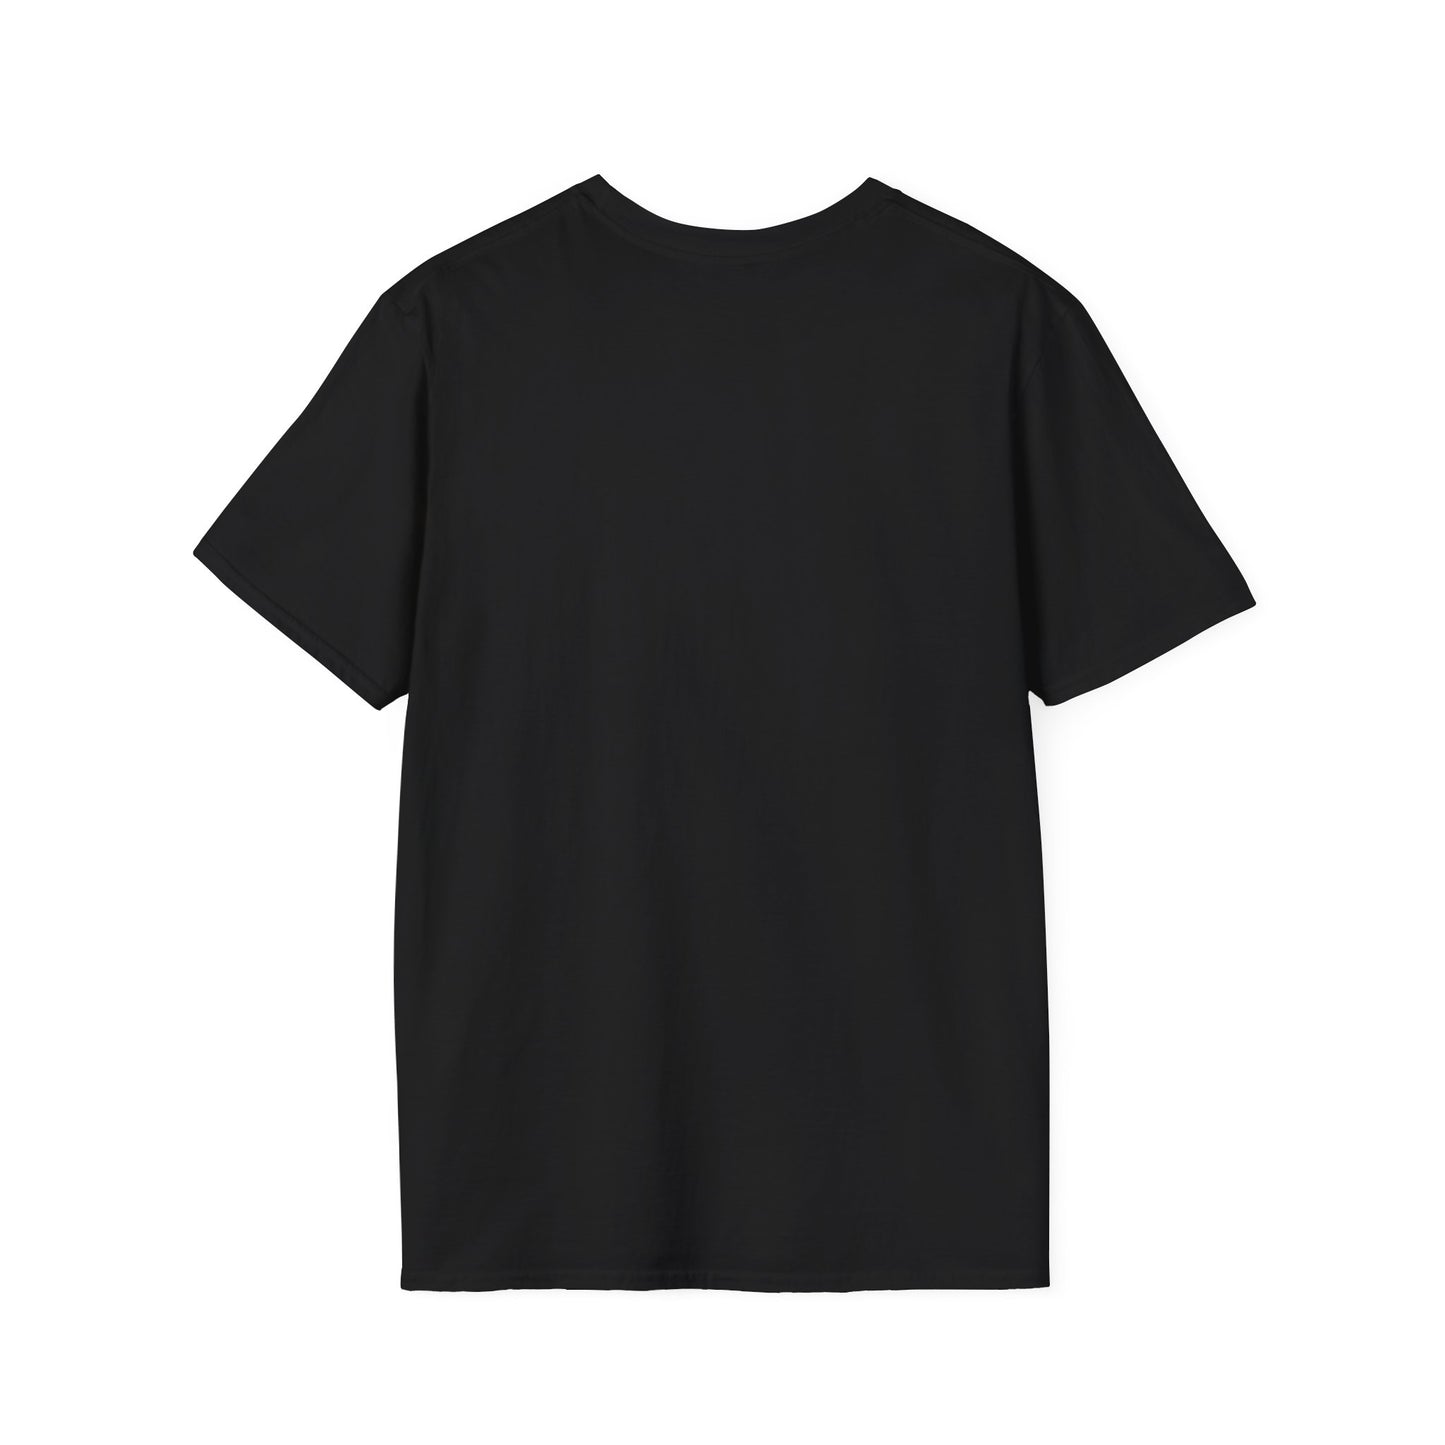 Unisex Softstyle "I got this shirt @ TheShopAtTheEndOfTheMultiverse.com" T-Shirt